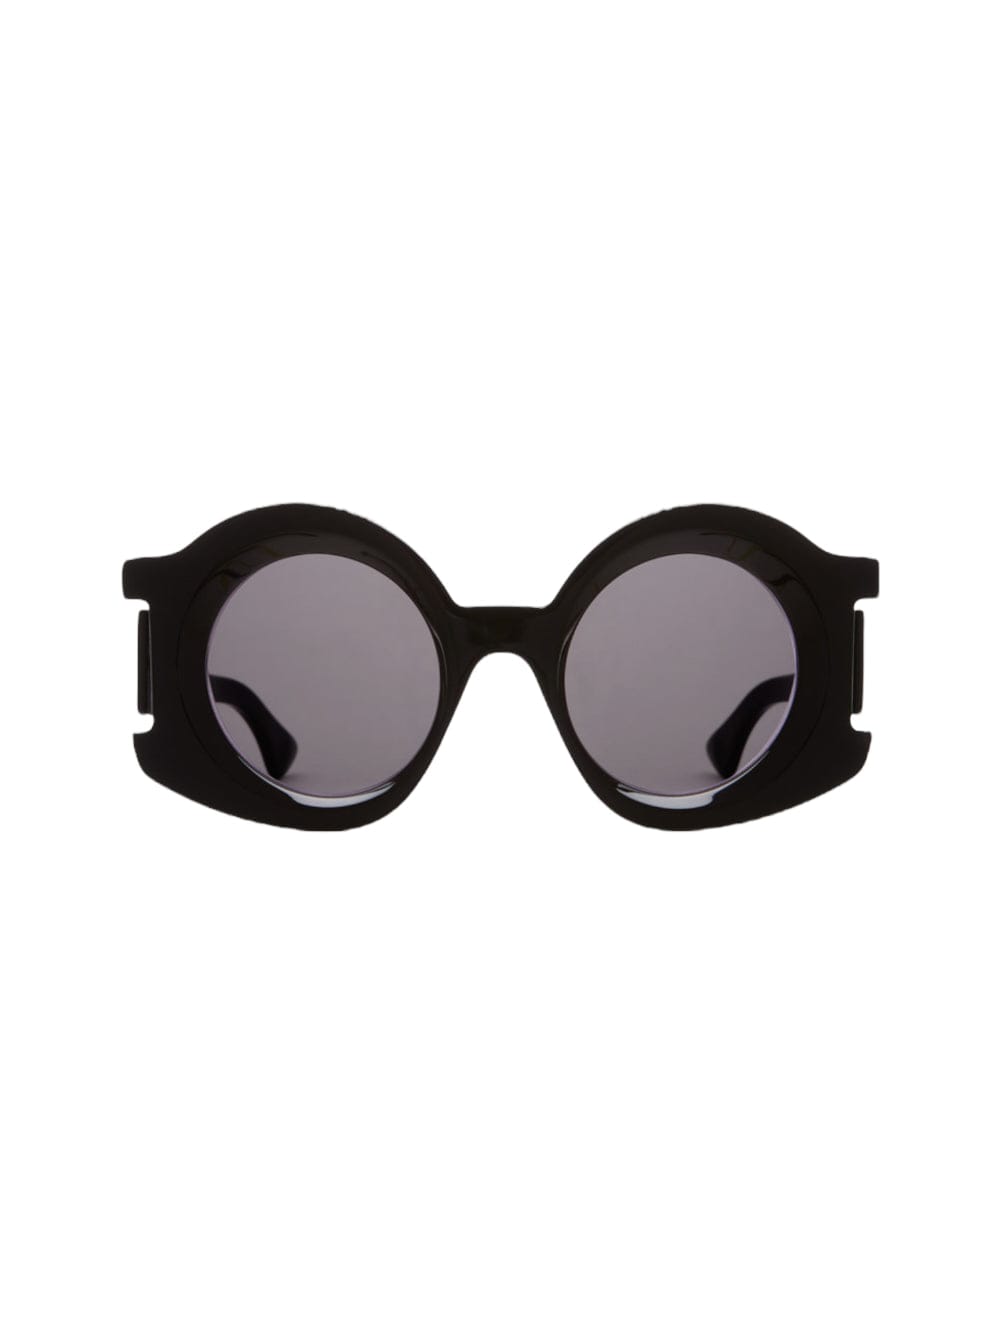 Maske R4 - Black Sunglasses